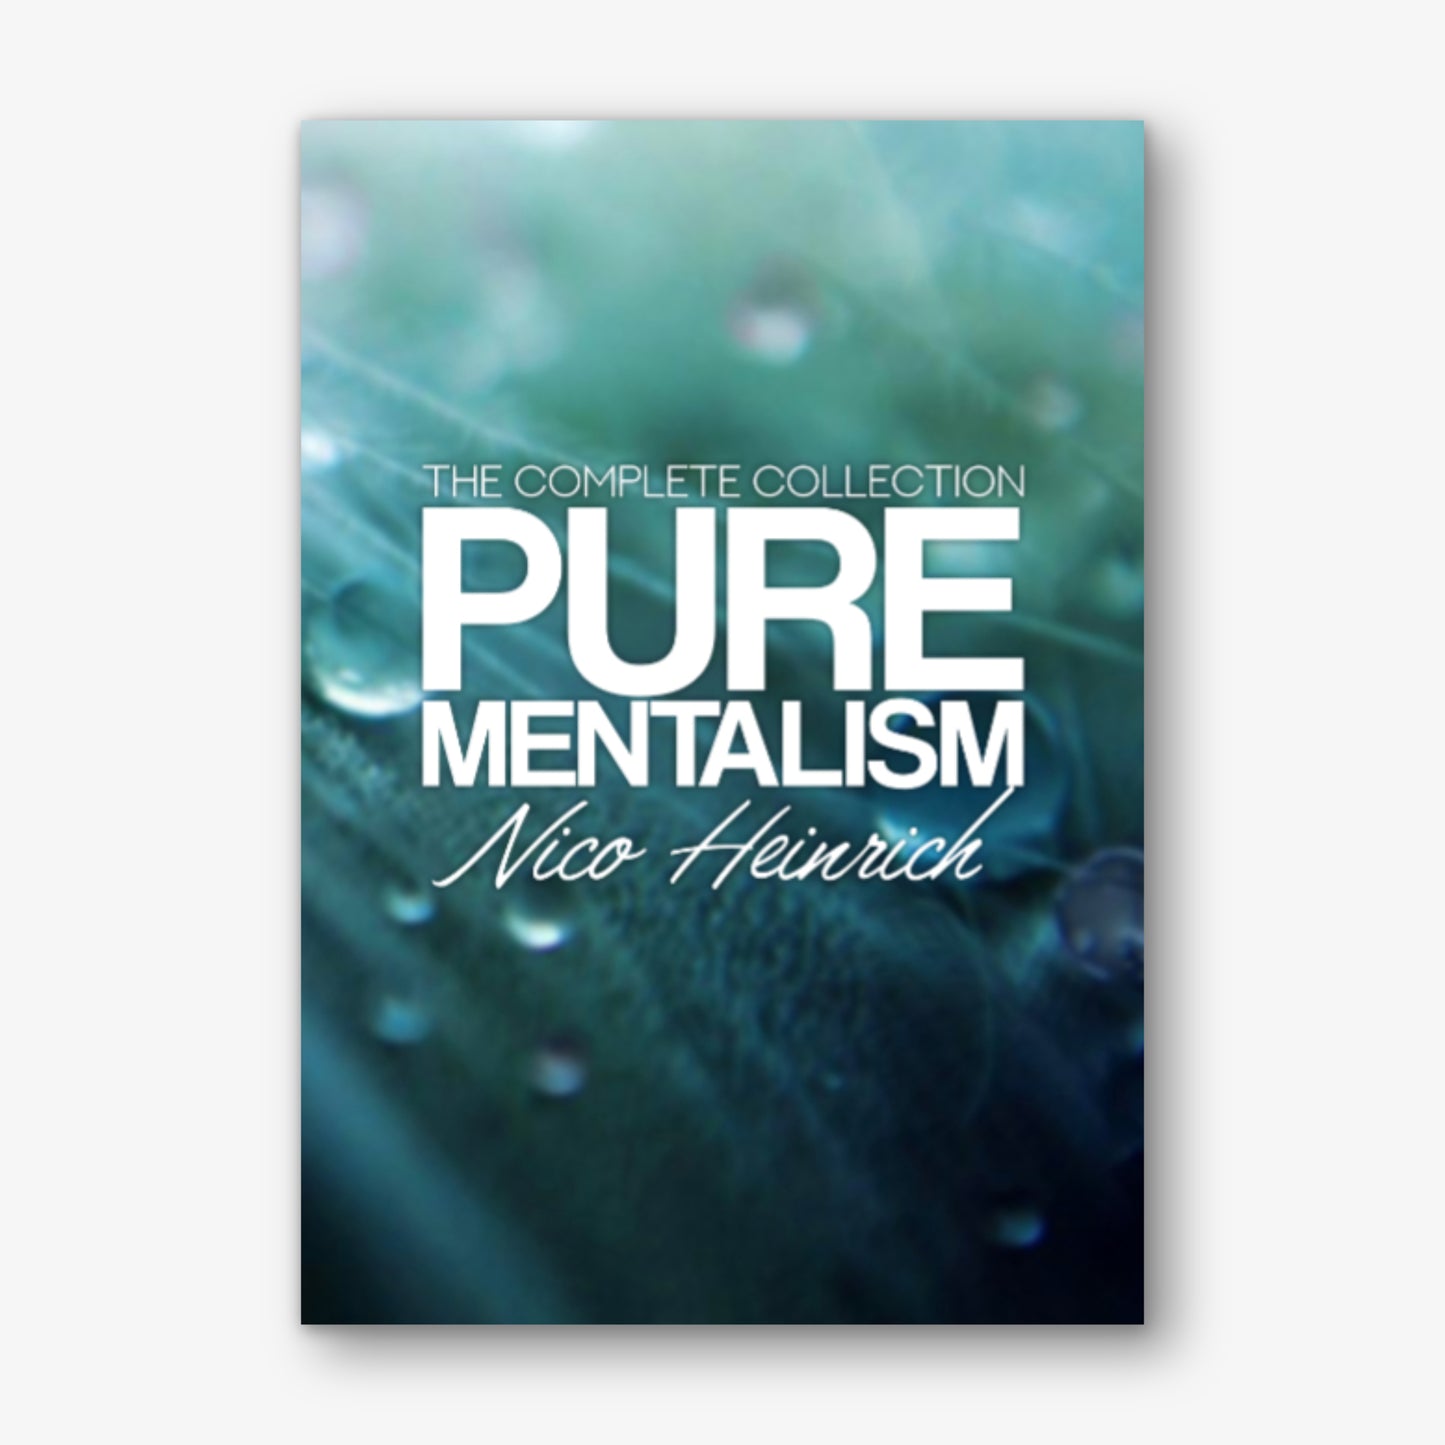 Pure Mentalism by Nico Heinrich